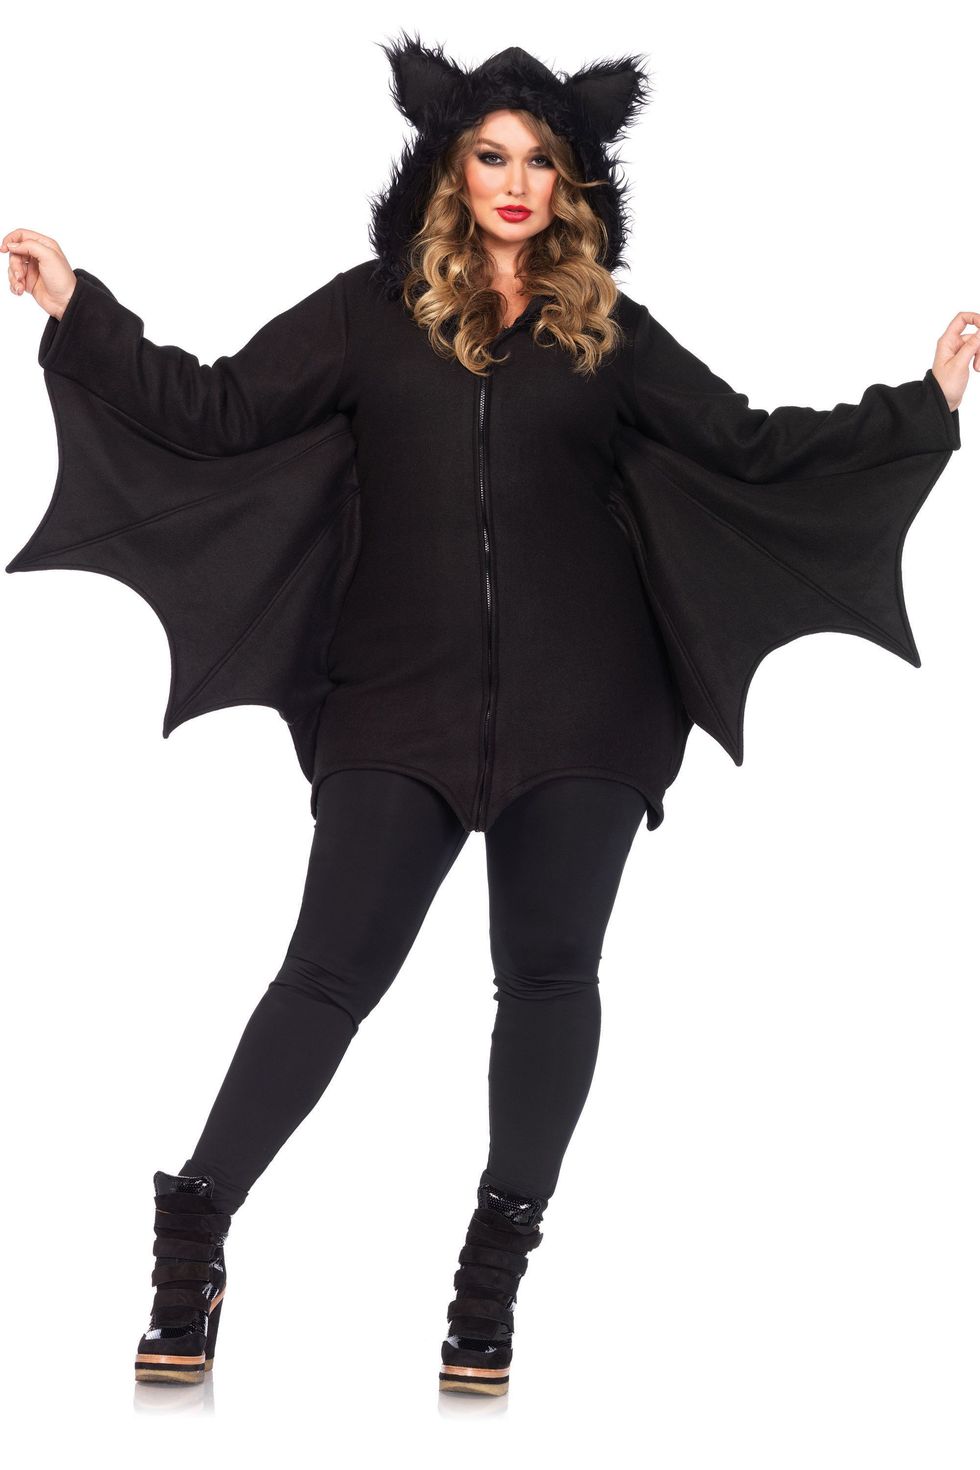 Plus Size Halloween Costumes for Women & Men